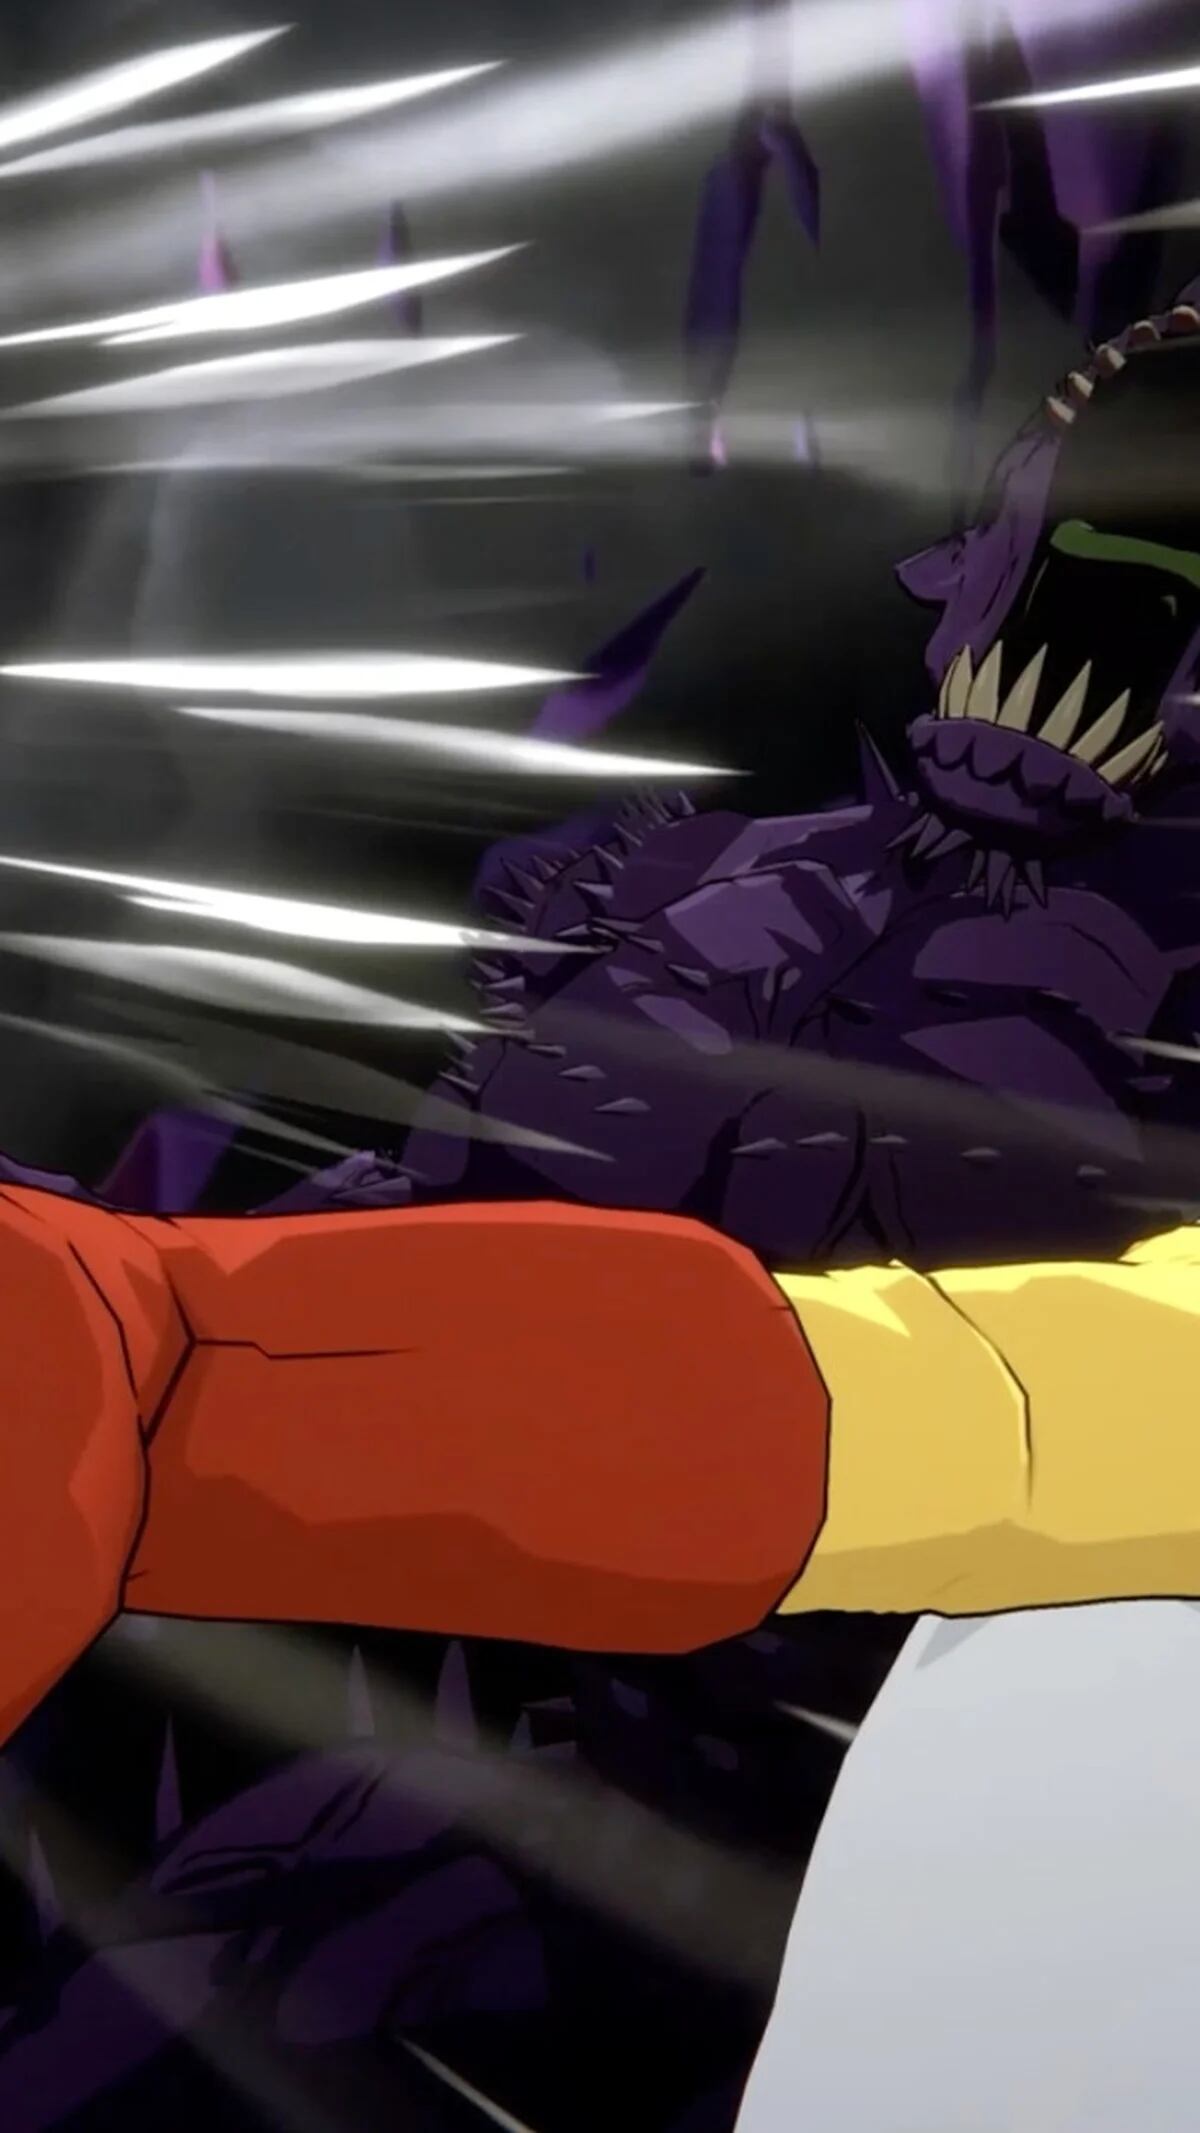 One Punch Man 2 acaba; ¿tendremos tercera temporada del anime?